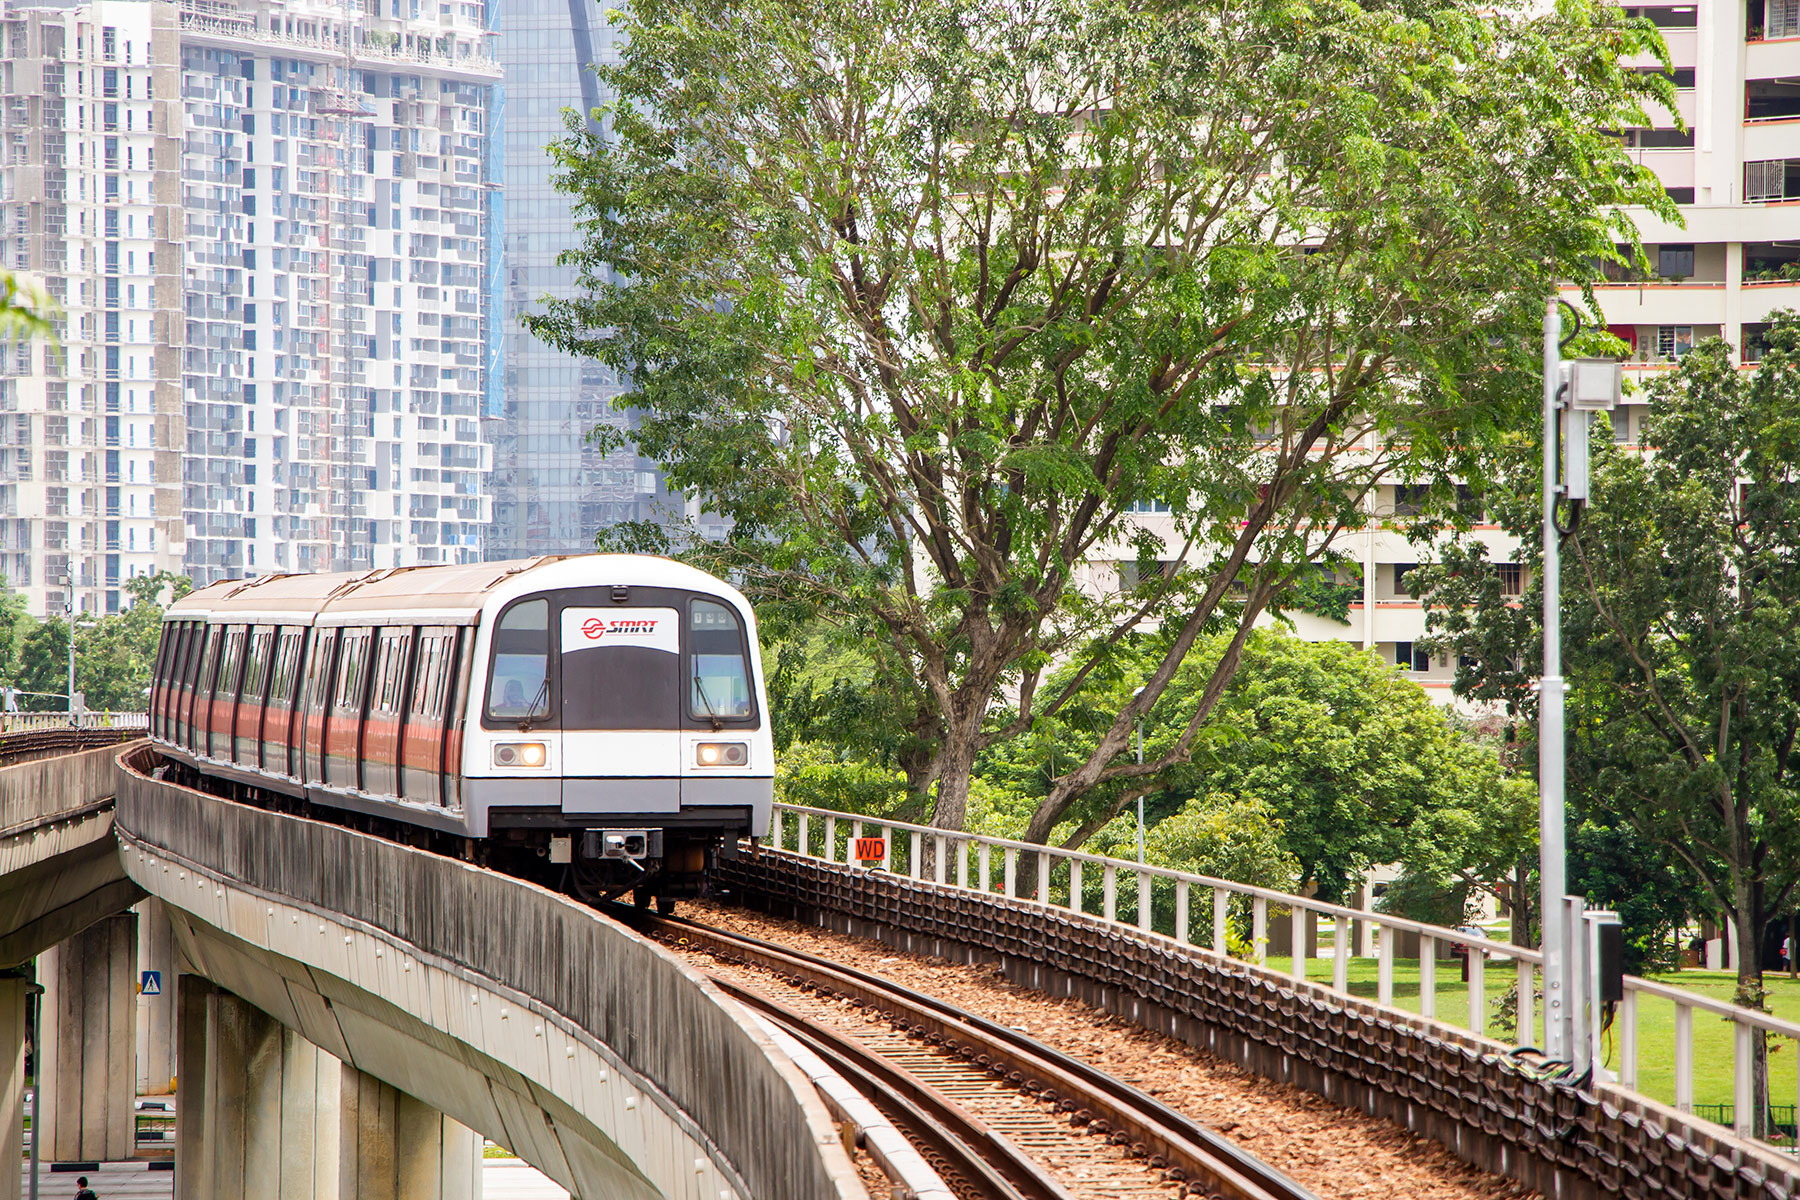 An MRT train approaching